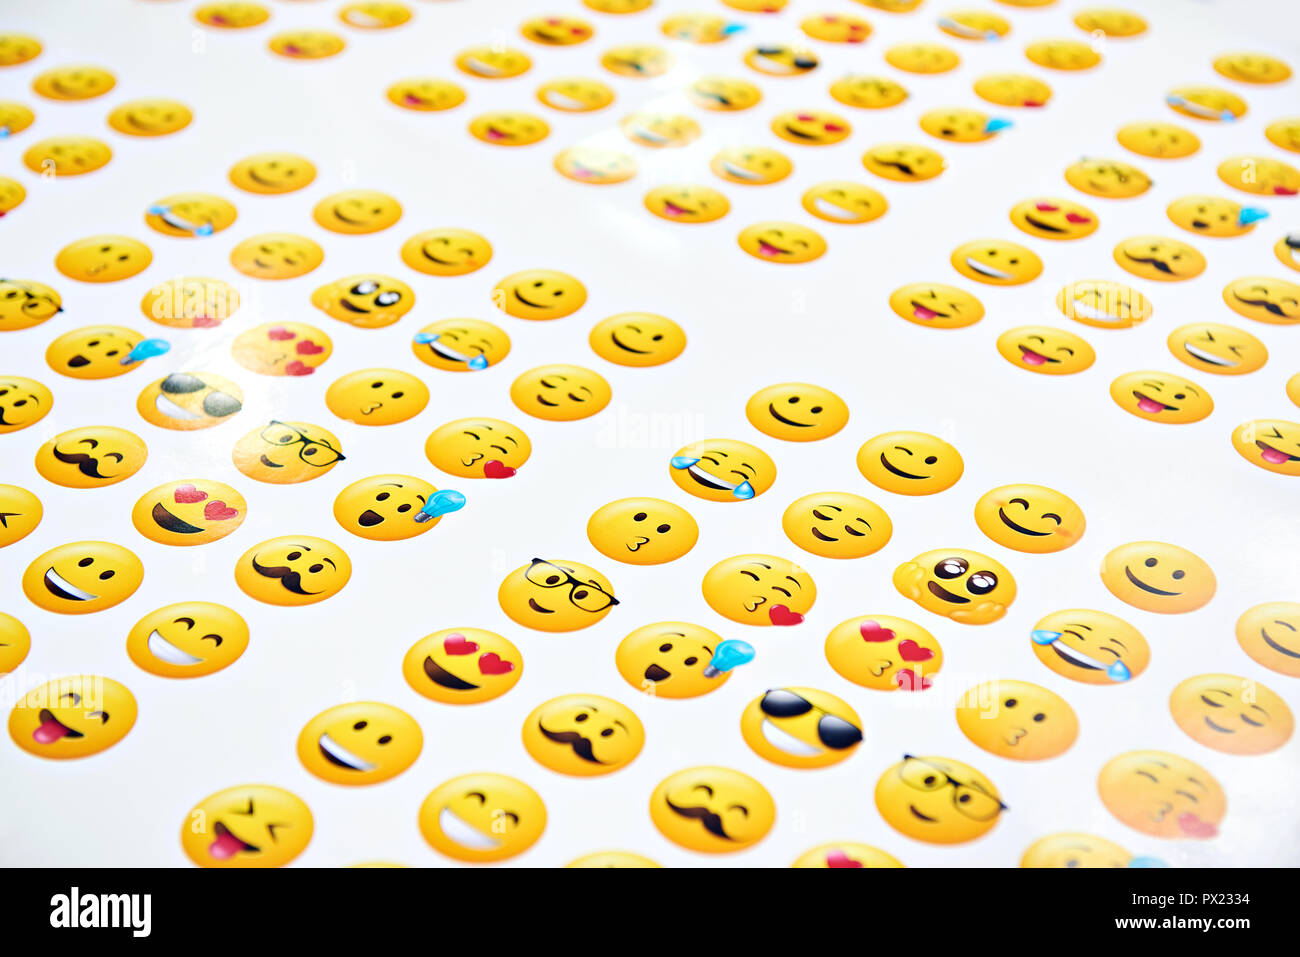 Funny yellow smileys on a white background Stock Photo